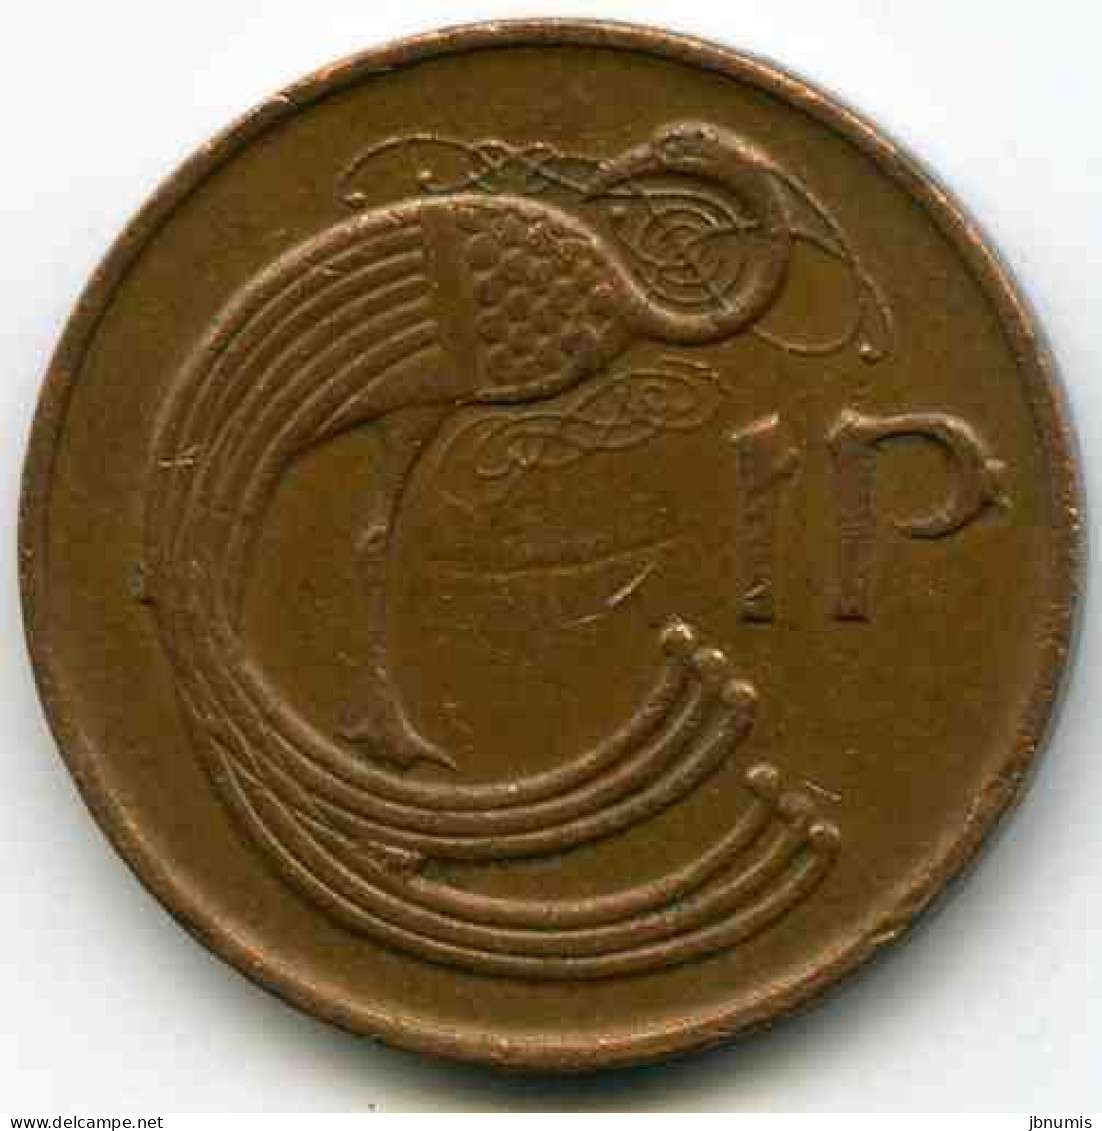 Irlande Ireland 1 Penny 1985 KM 20 - Irland